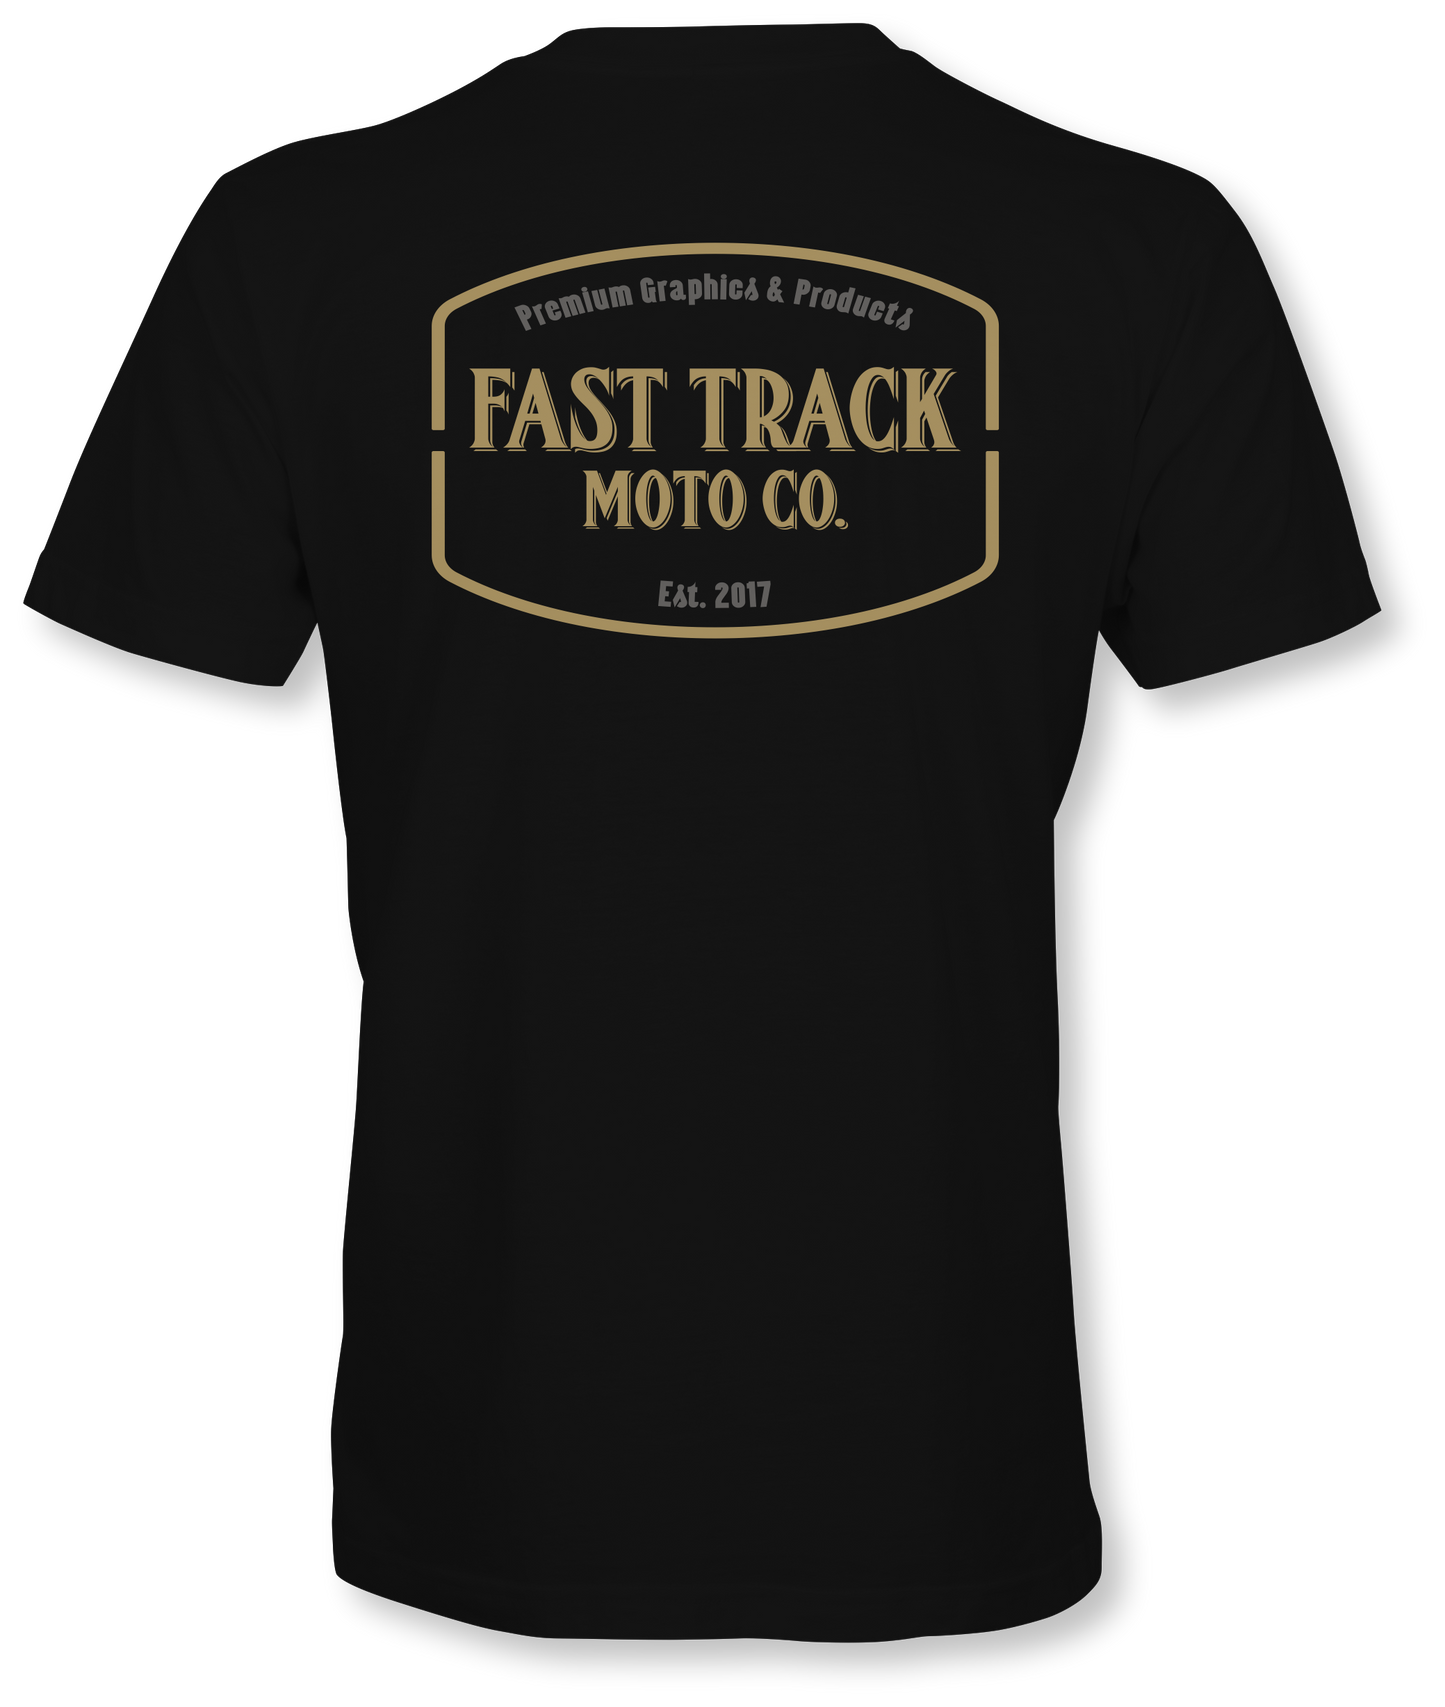 Fast Track Moto Co. T-Shirt